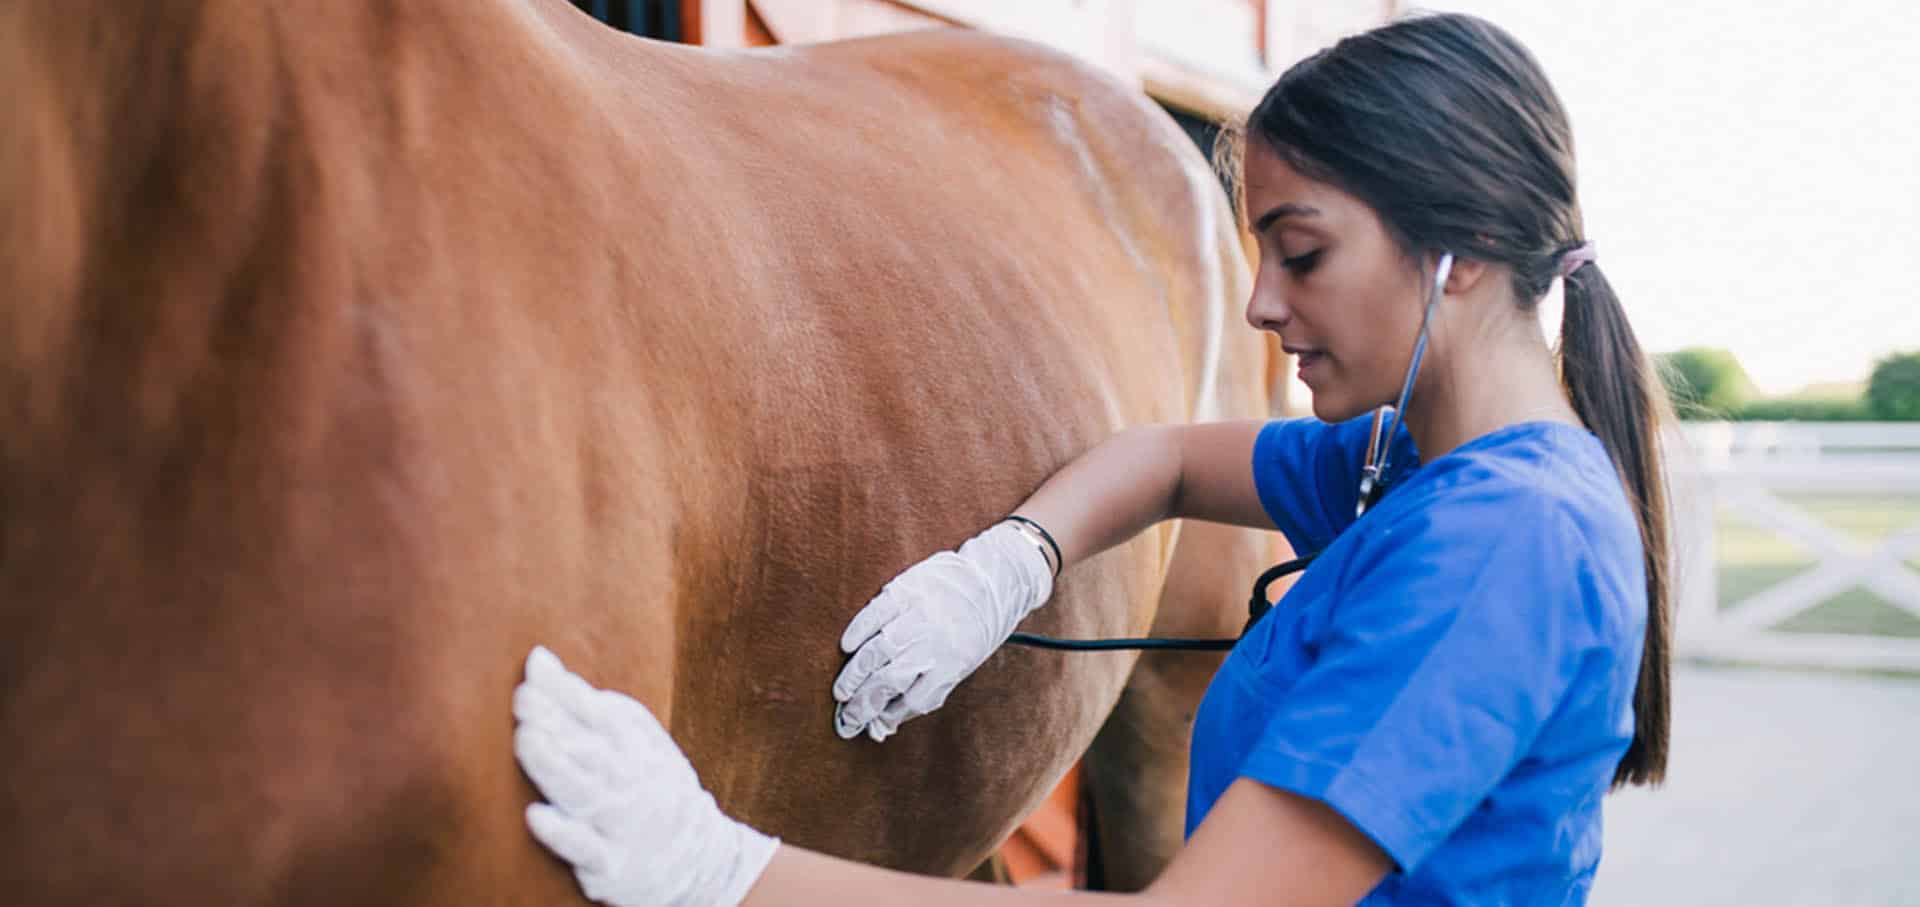 Vet checking horse body — Best Veterinary Services in Bundaberg, QLD